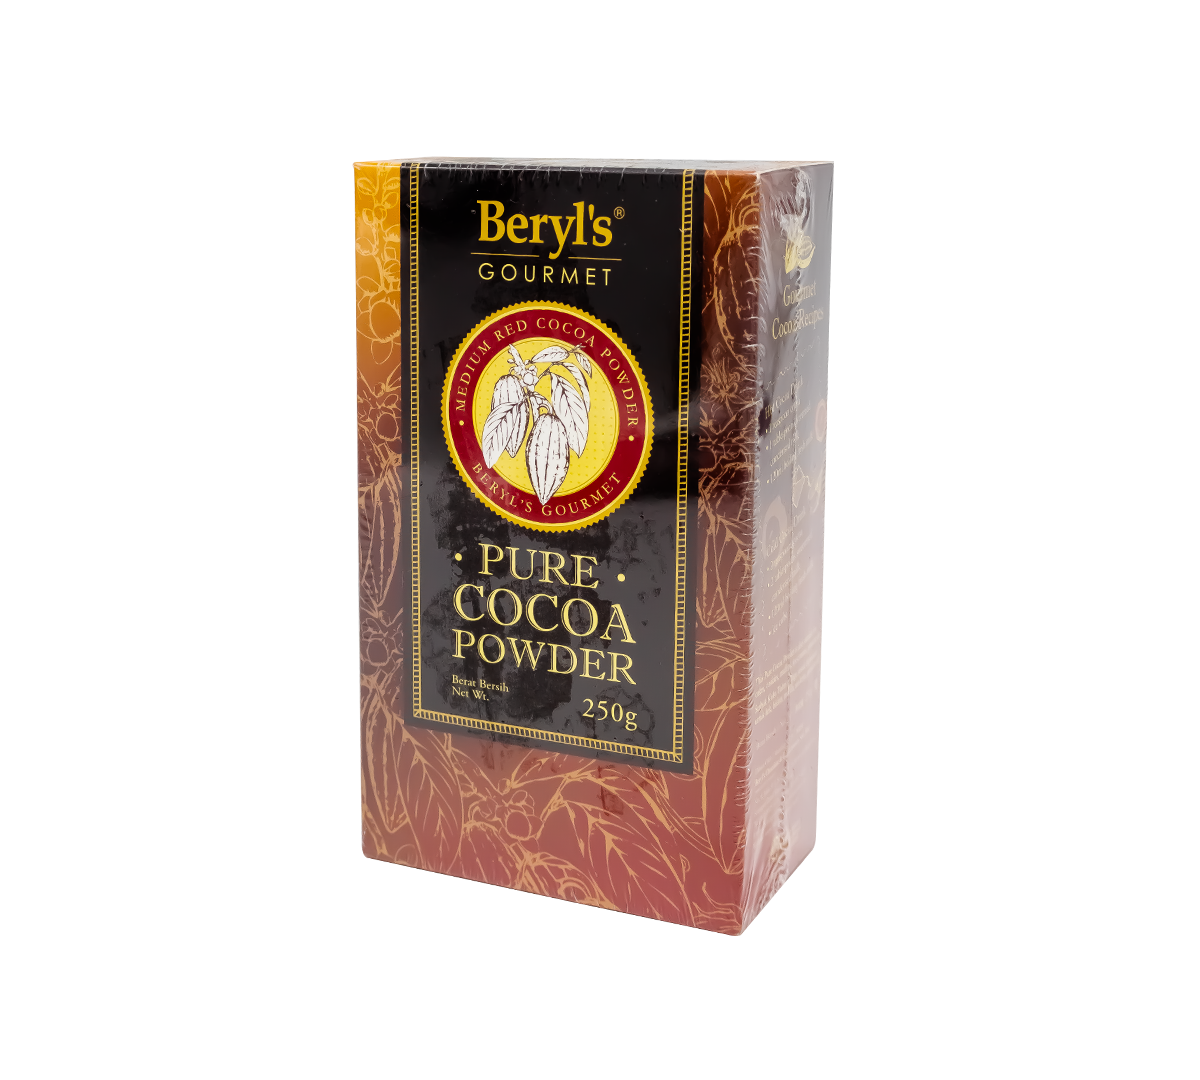 Beryls Gourmet Pure Cocoa Powder 250g